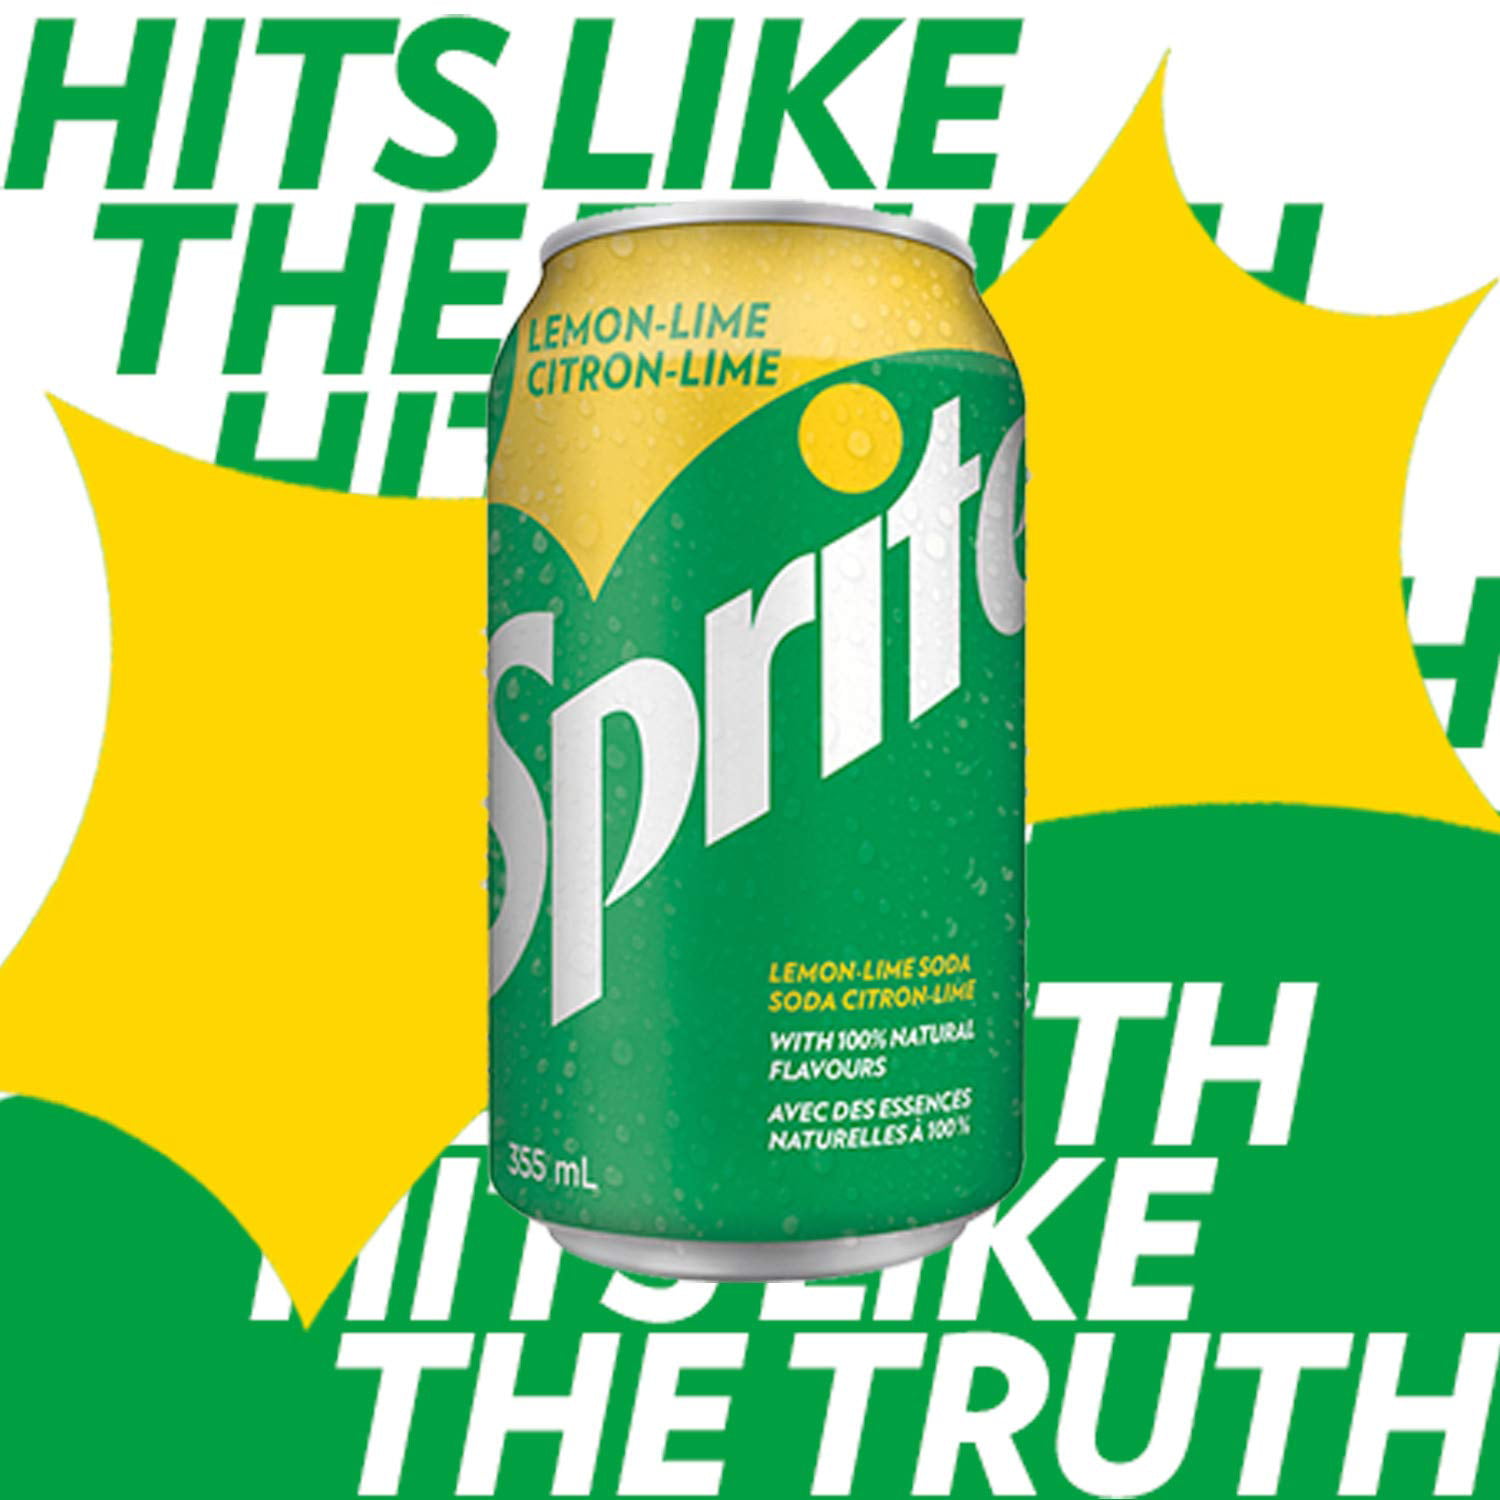 Sprite Lemon Lime Soda, 355mL/12oz., Cans, 12 Pack 